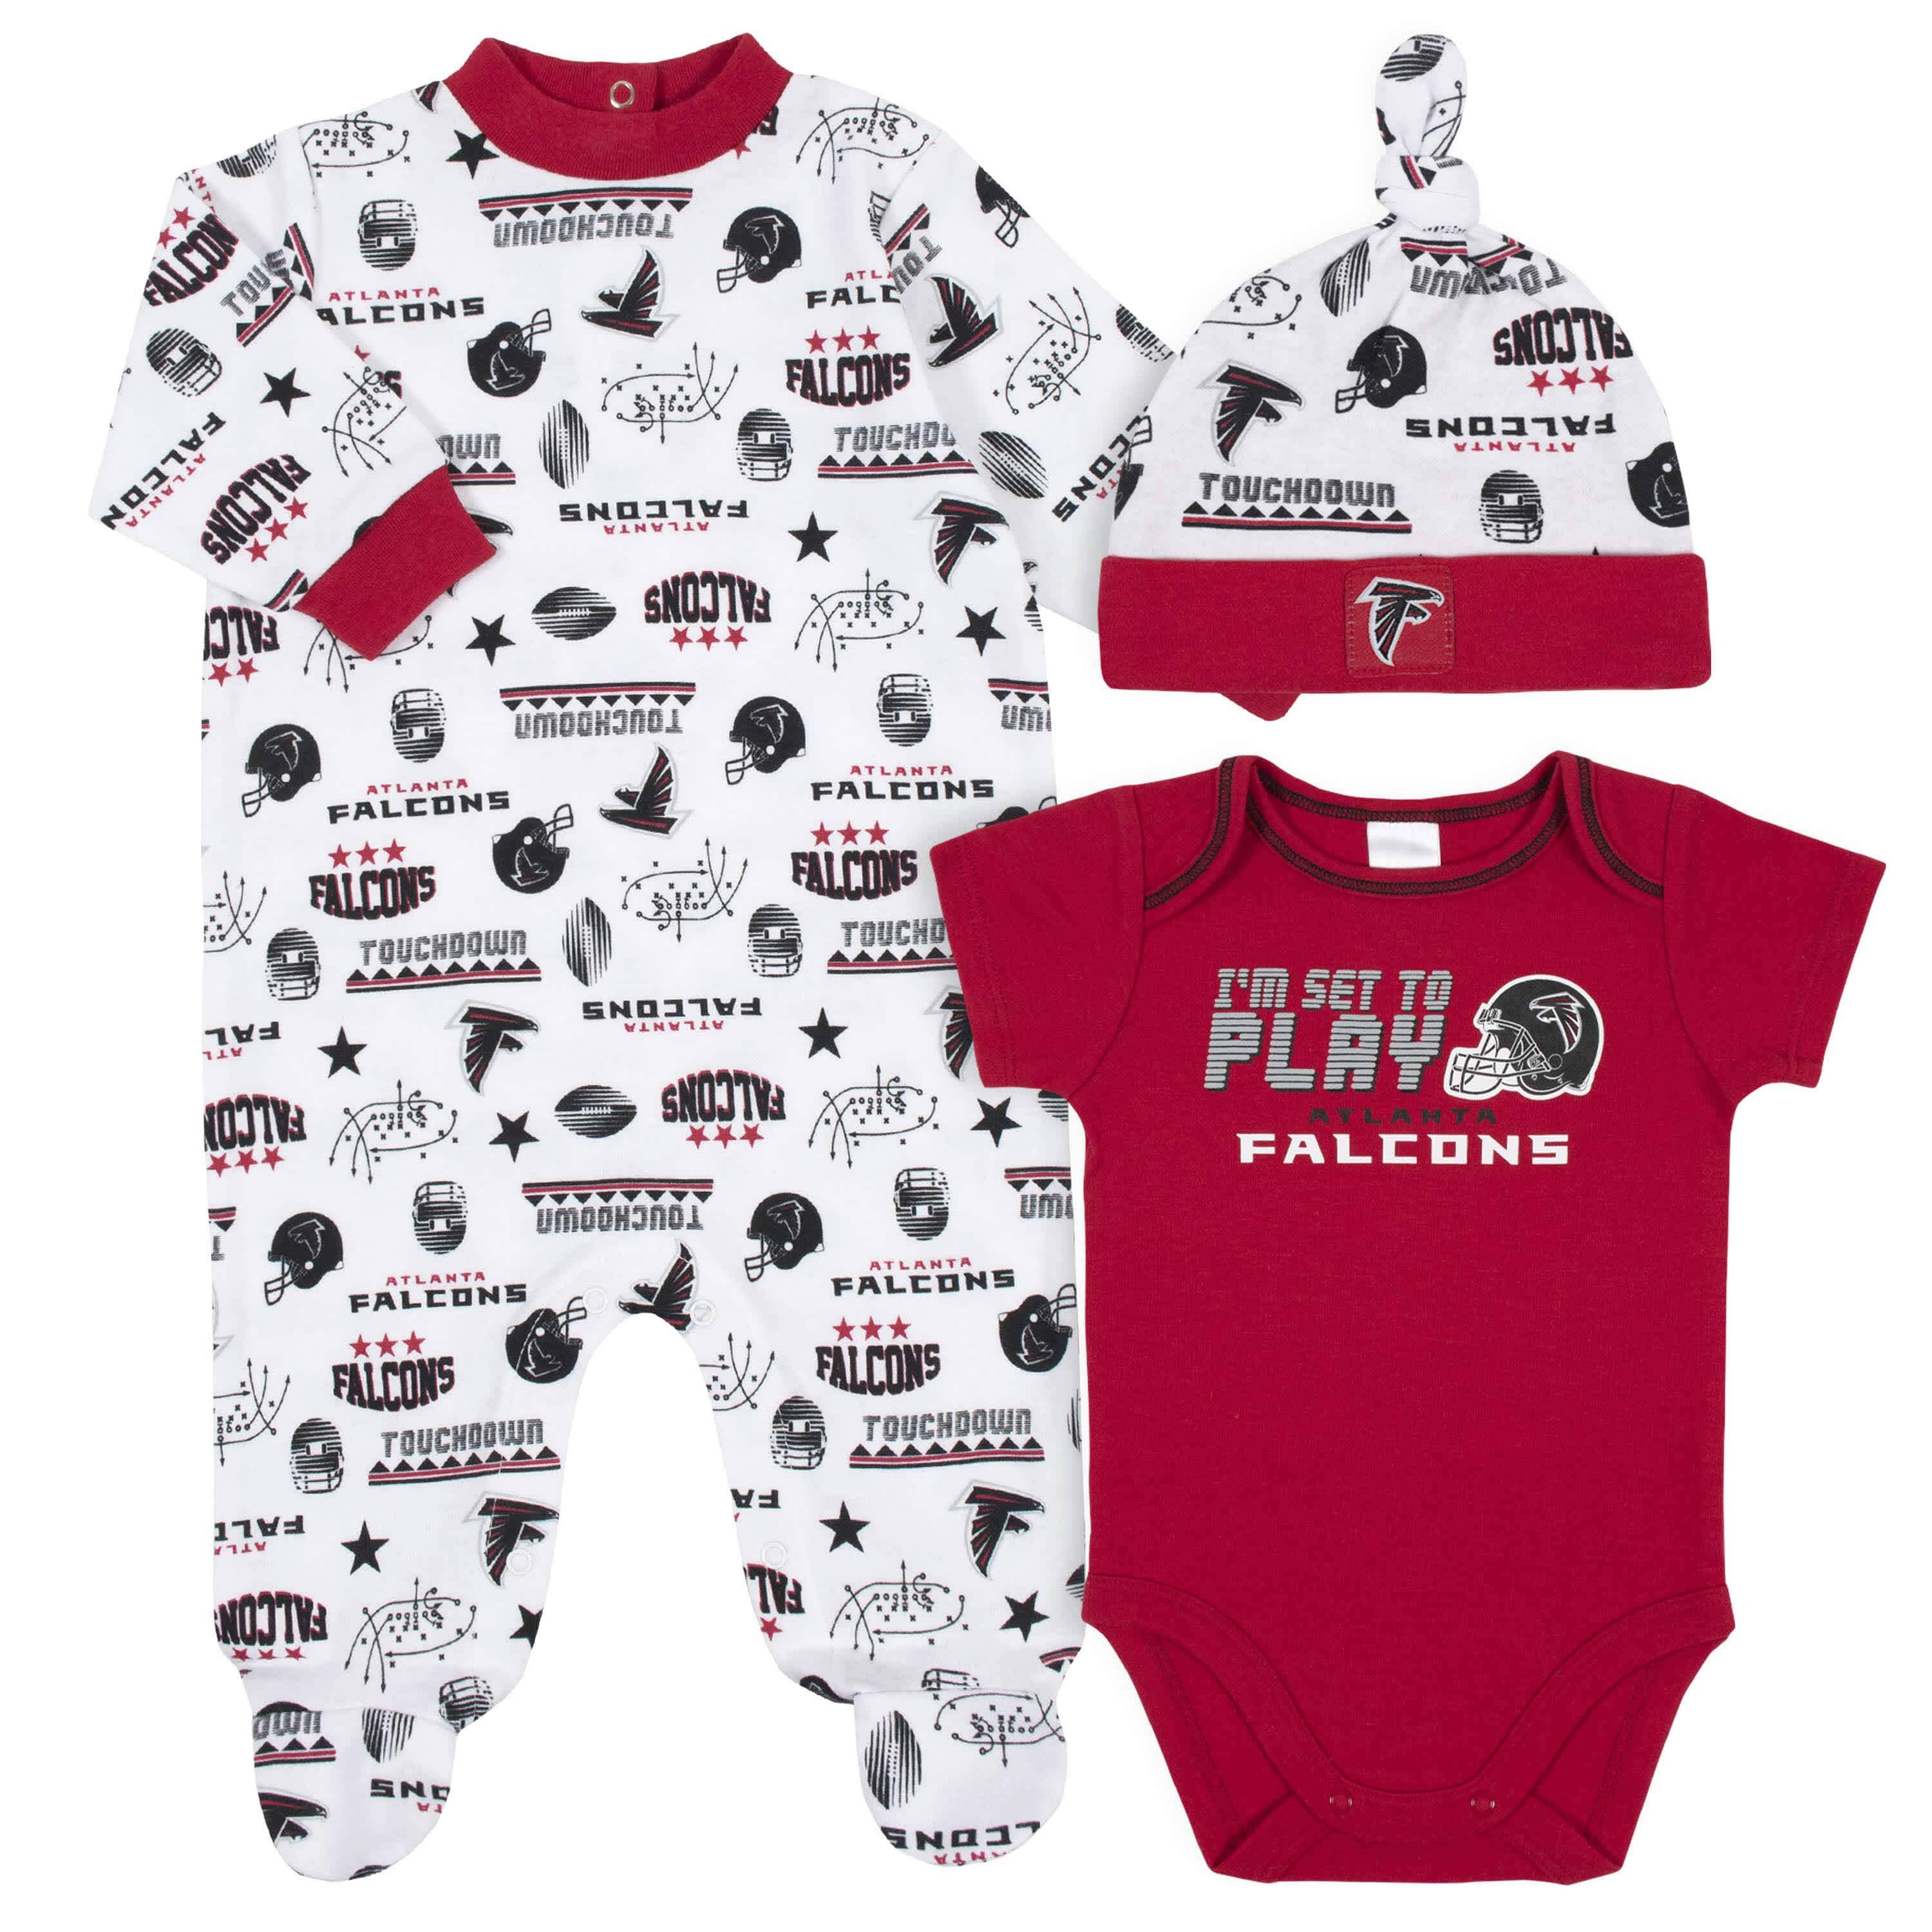 Atlanta Falcons Merchandise, Falcons Apparel, Gear